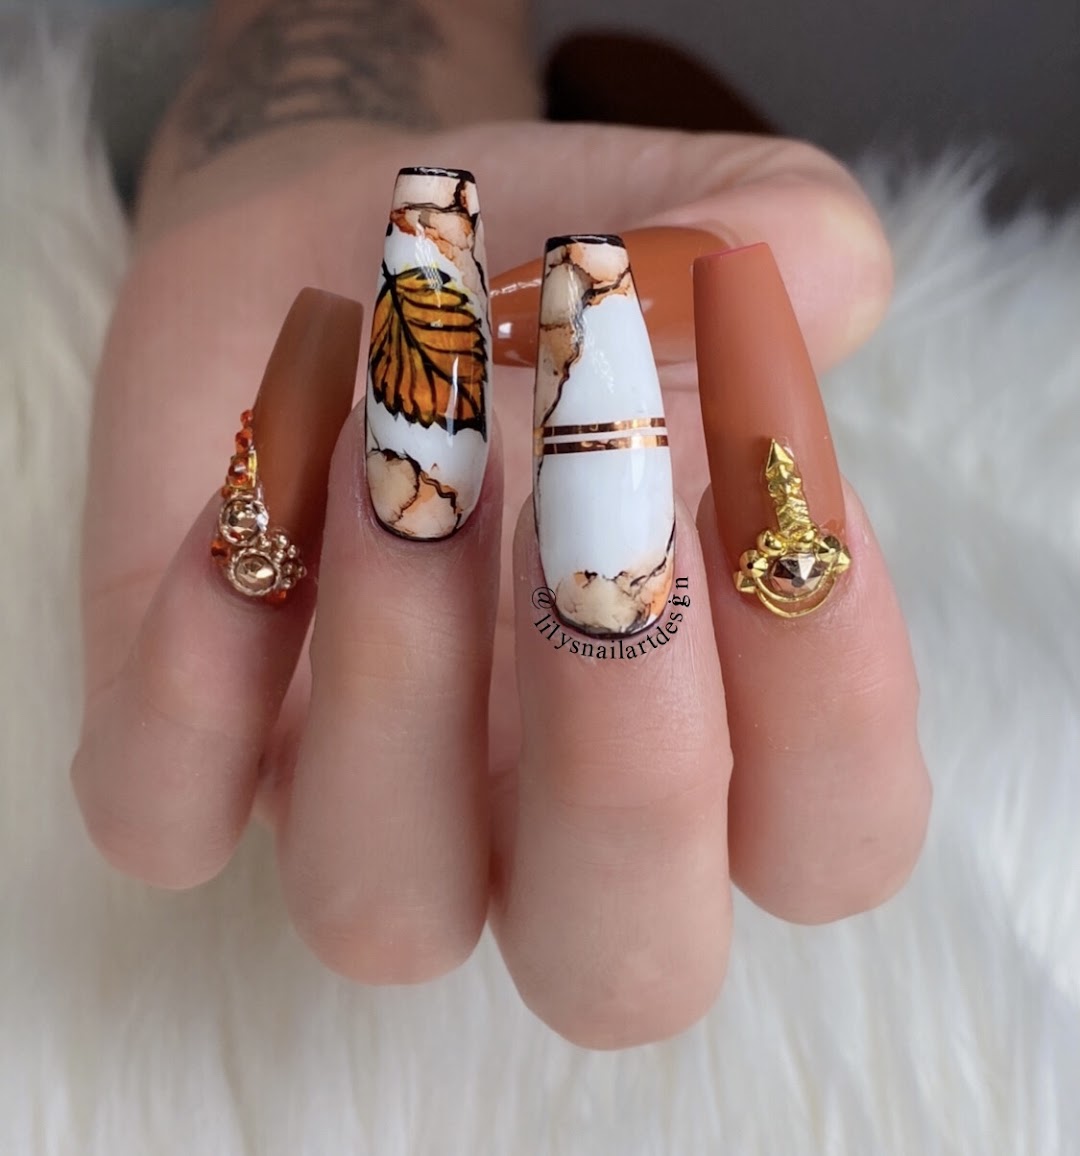 Lilys nail art design